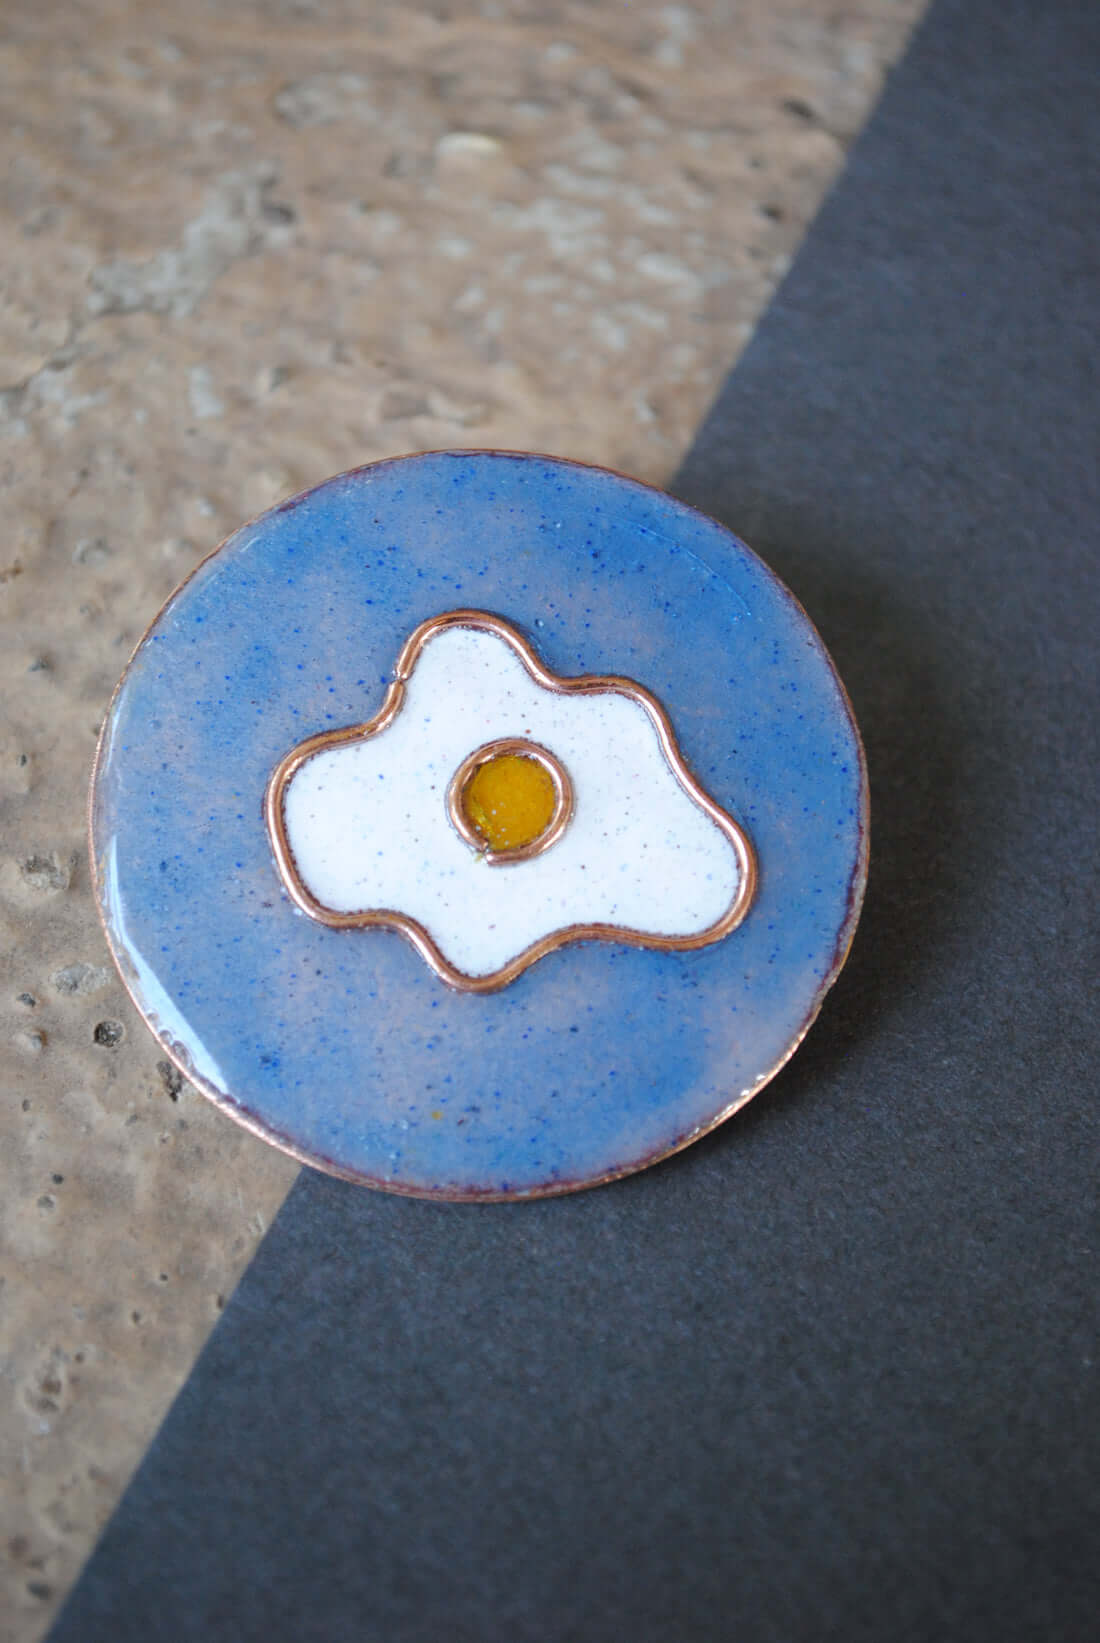 Copper enamel trinkets, lapel pin handcrafted in Maharashtra, India. Funky egg design